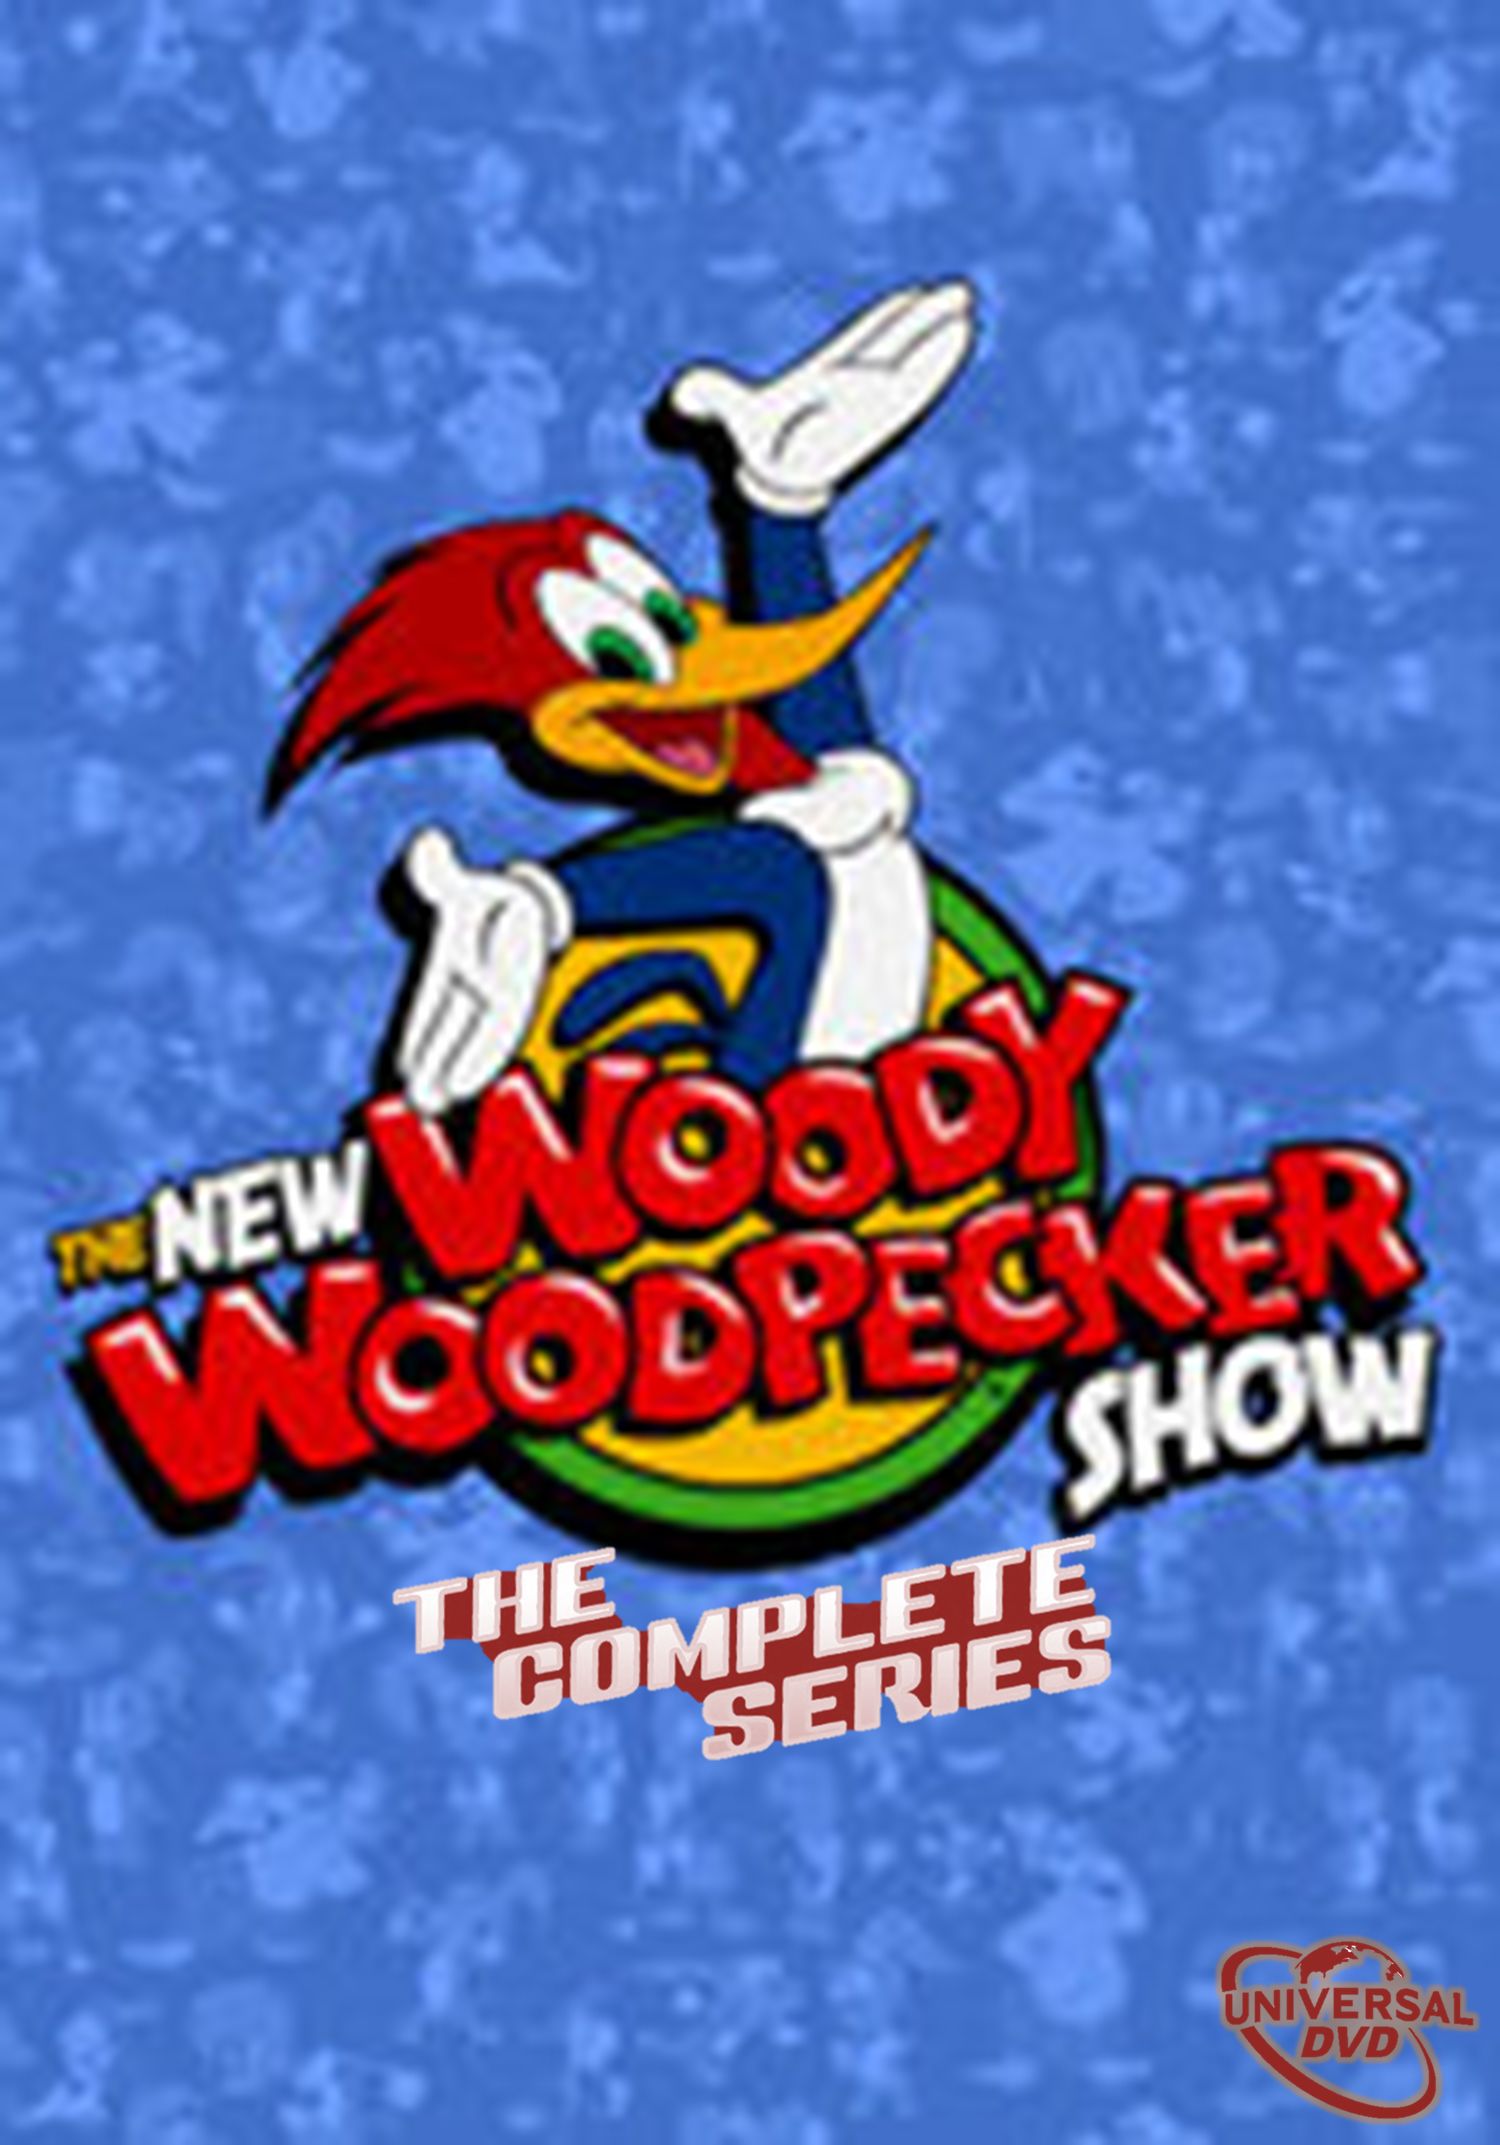 The New Woody Woodpecker Show ne zaman